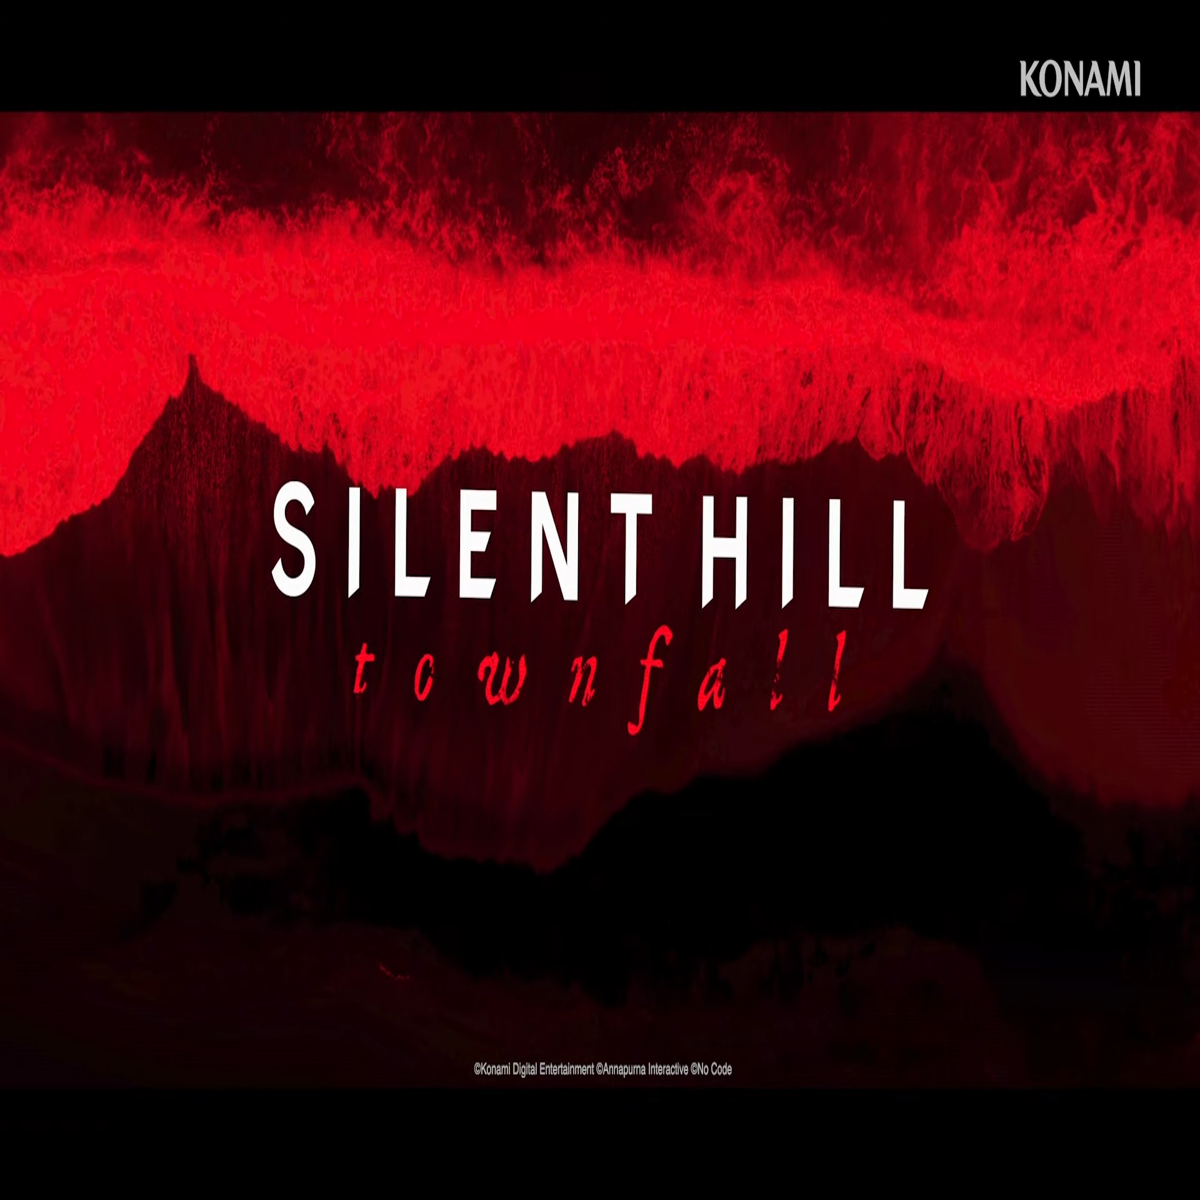 Insider: Silent Hill 2 remake in development by Bloober Team